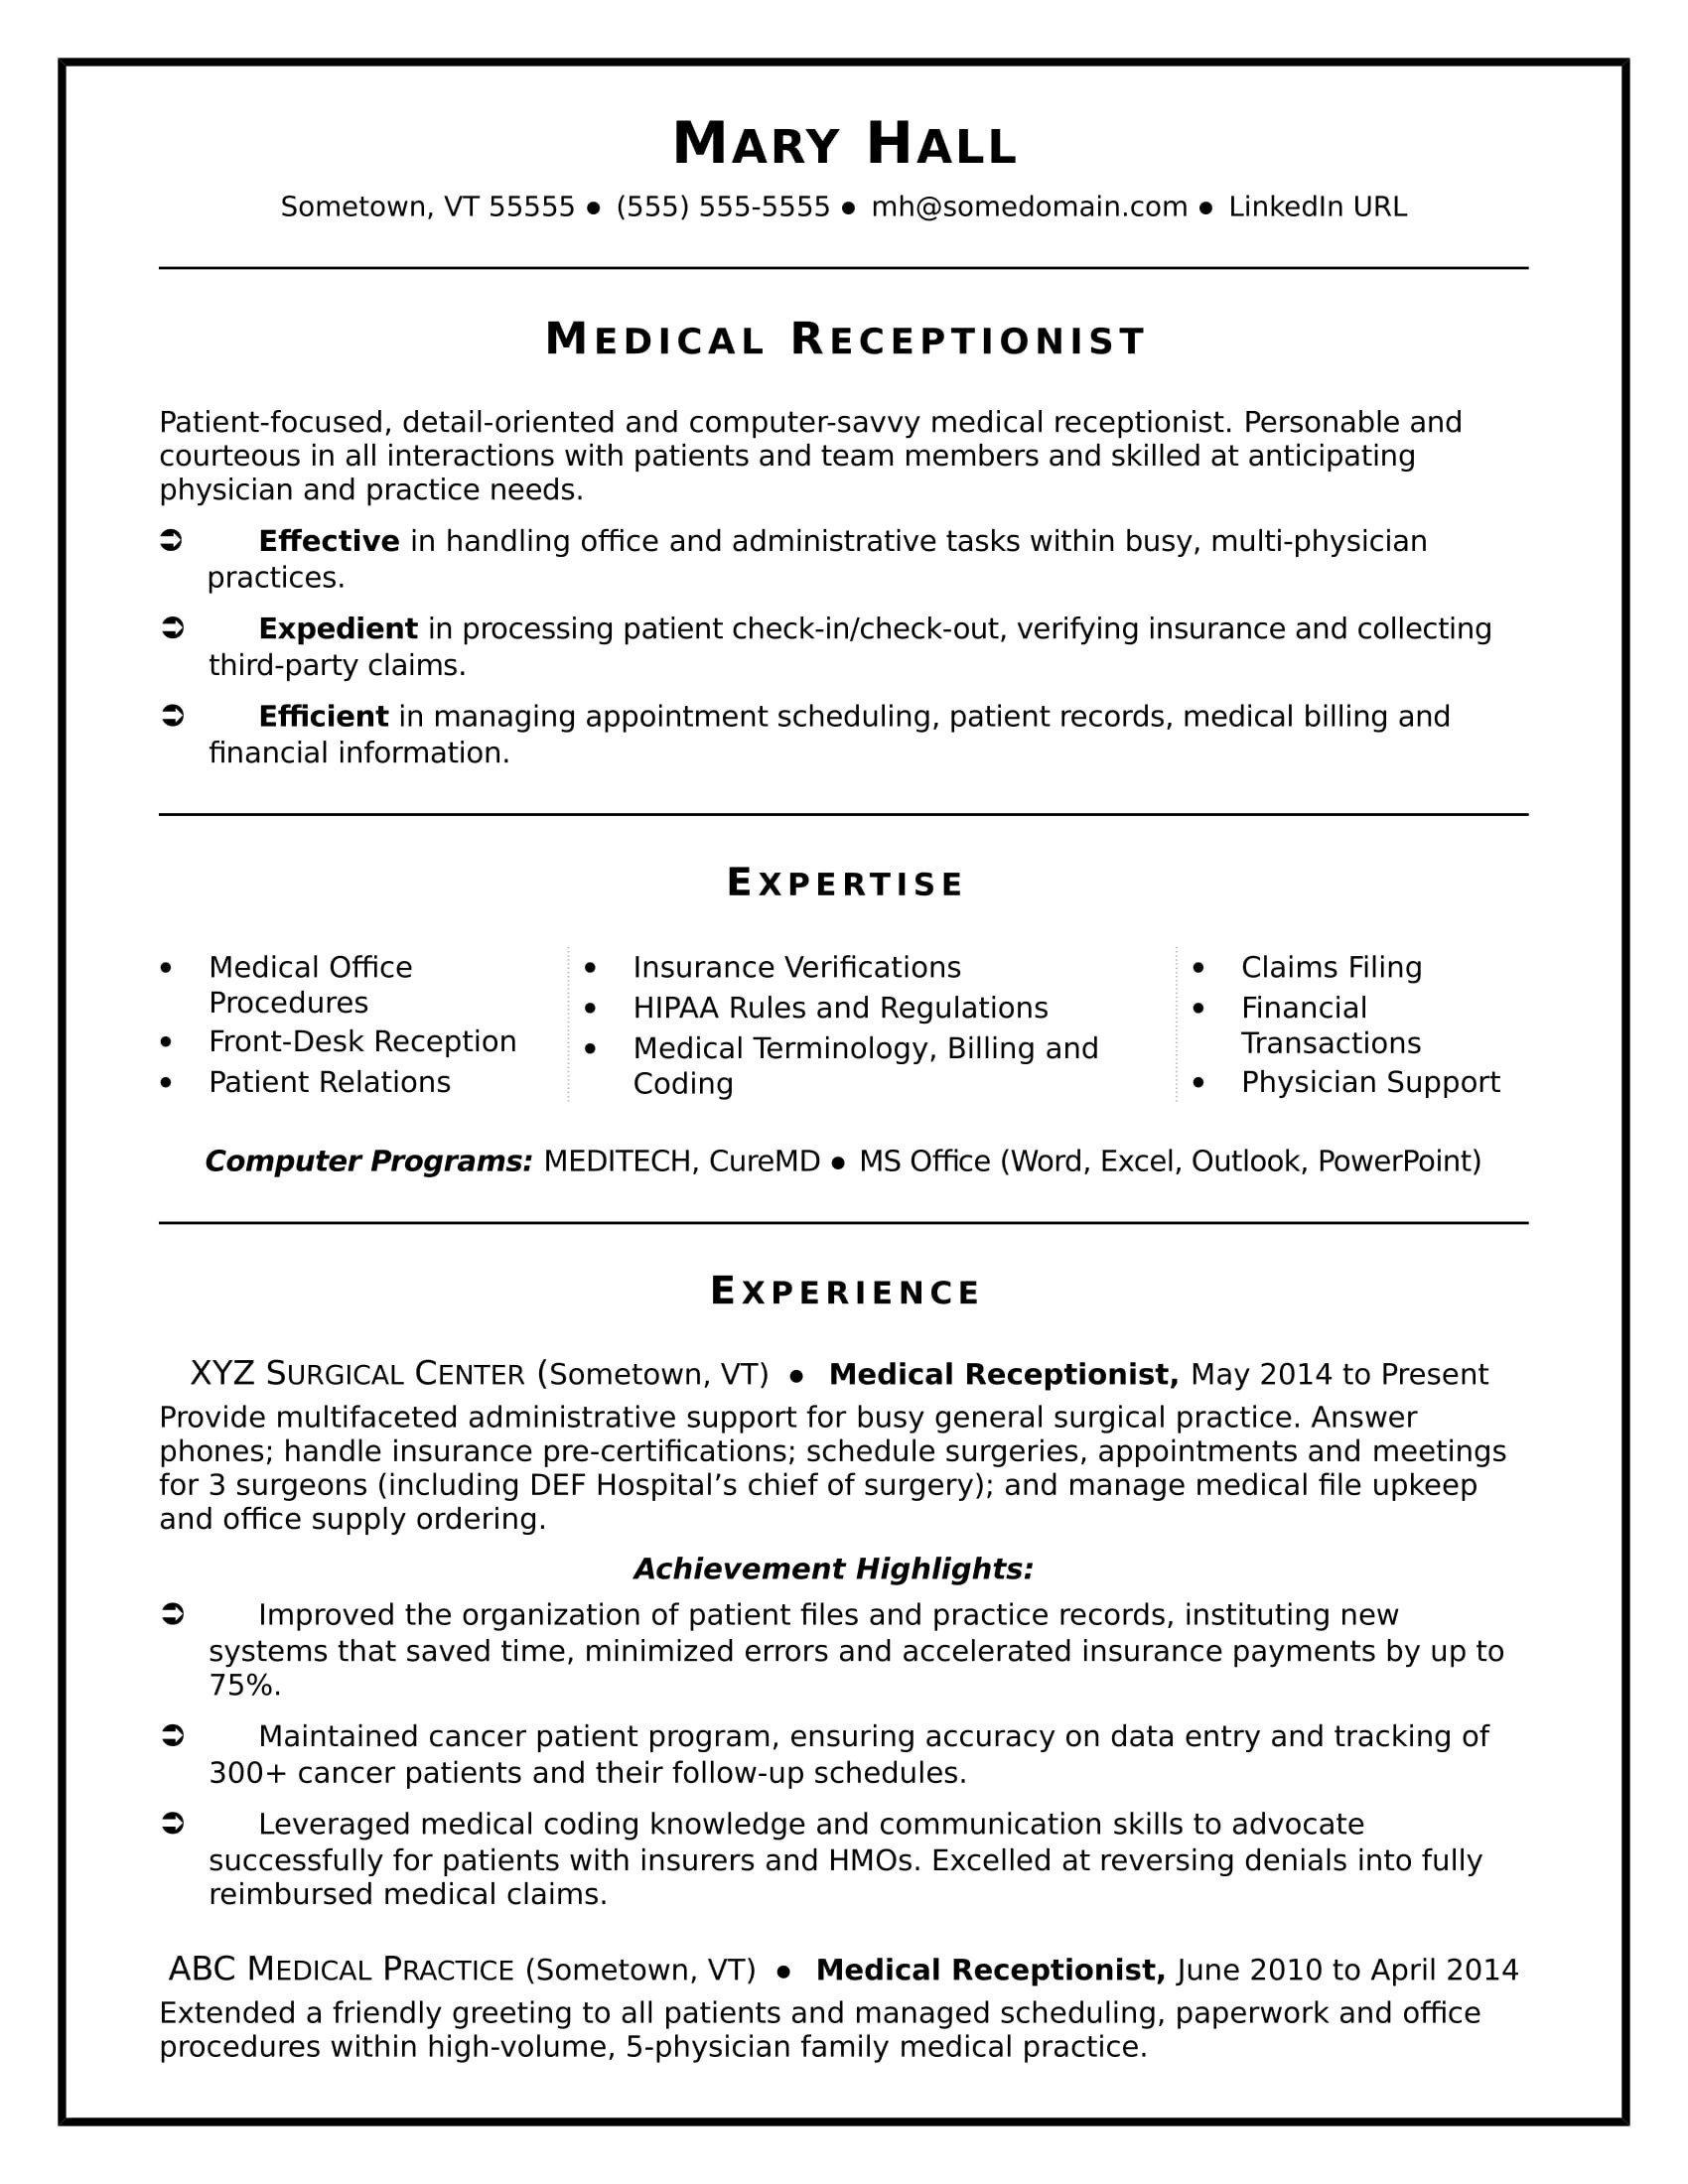 Sample Resume for New Graduate Medical Office Specialist Medical Receptionist Resume Sample Monster.com